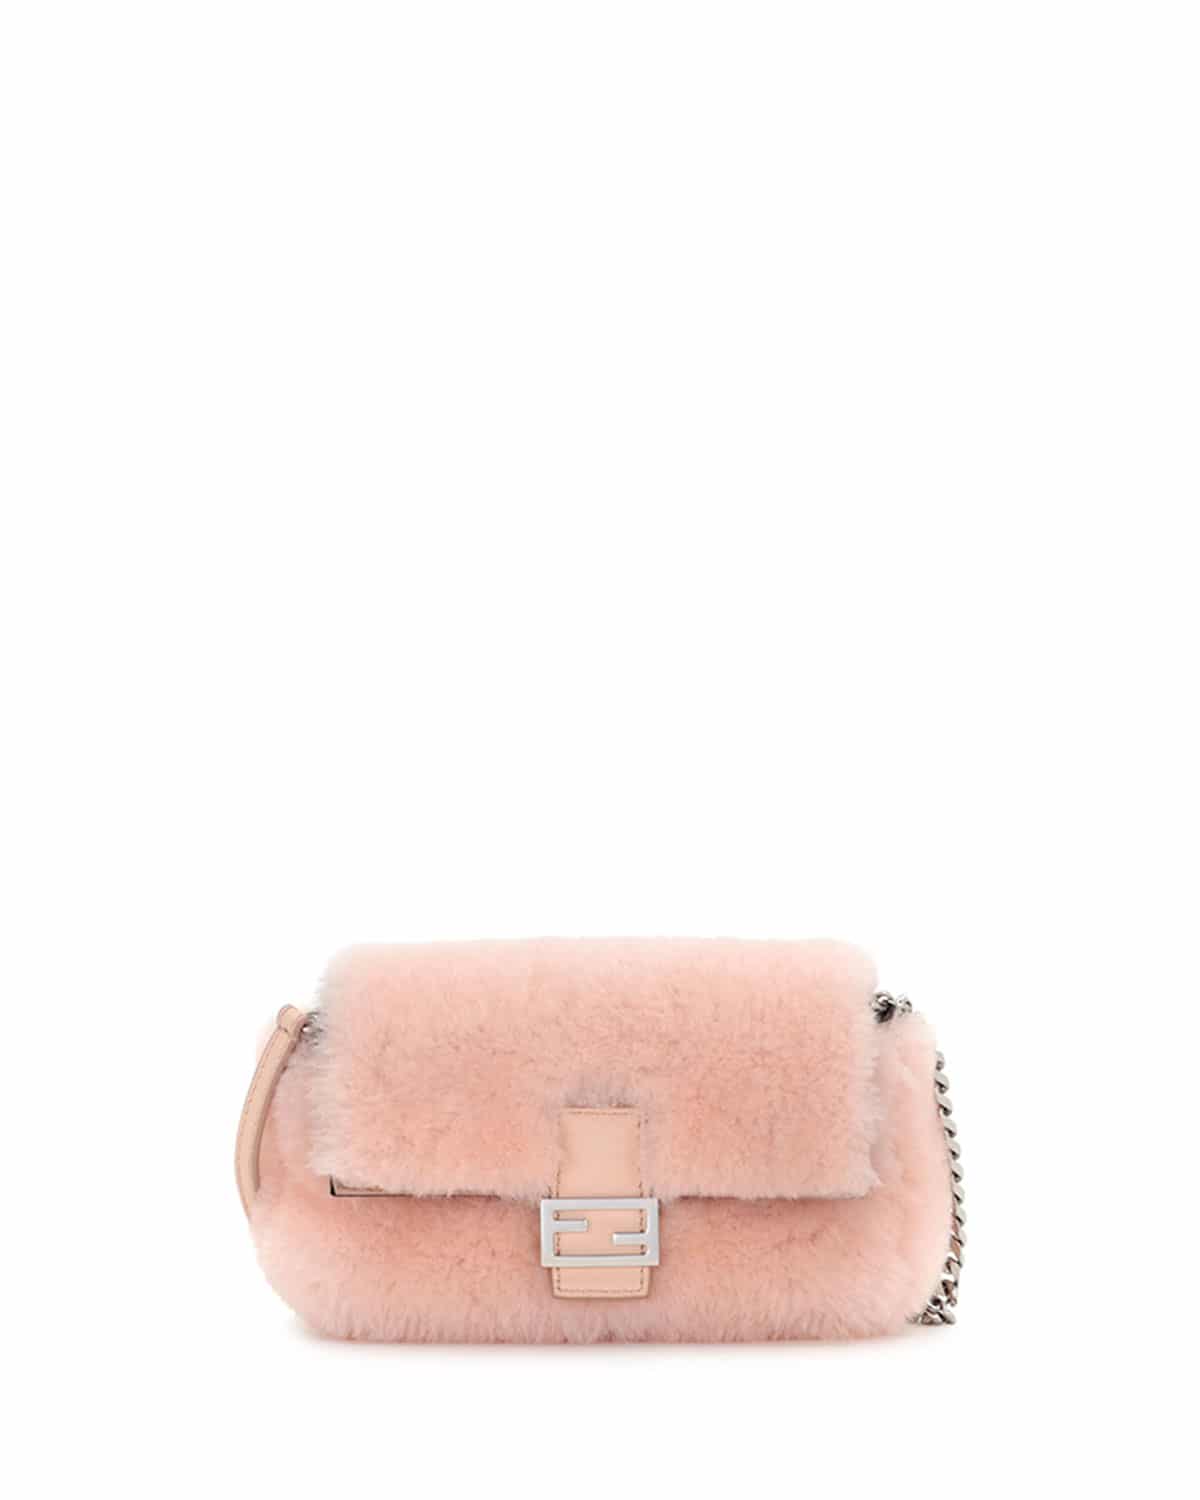 Fendi Fall/Winter 2015 Bag Collection Featuring the Peekaboo Clutch Bag ...